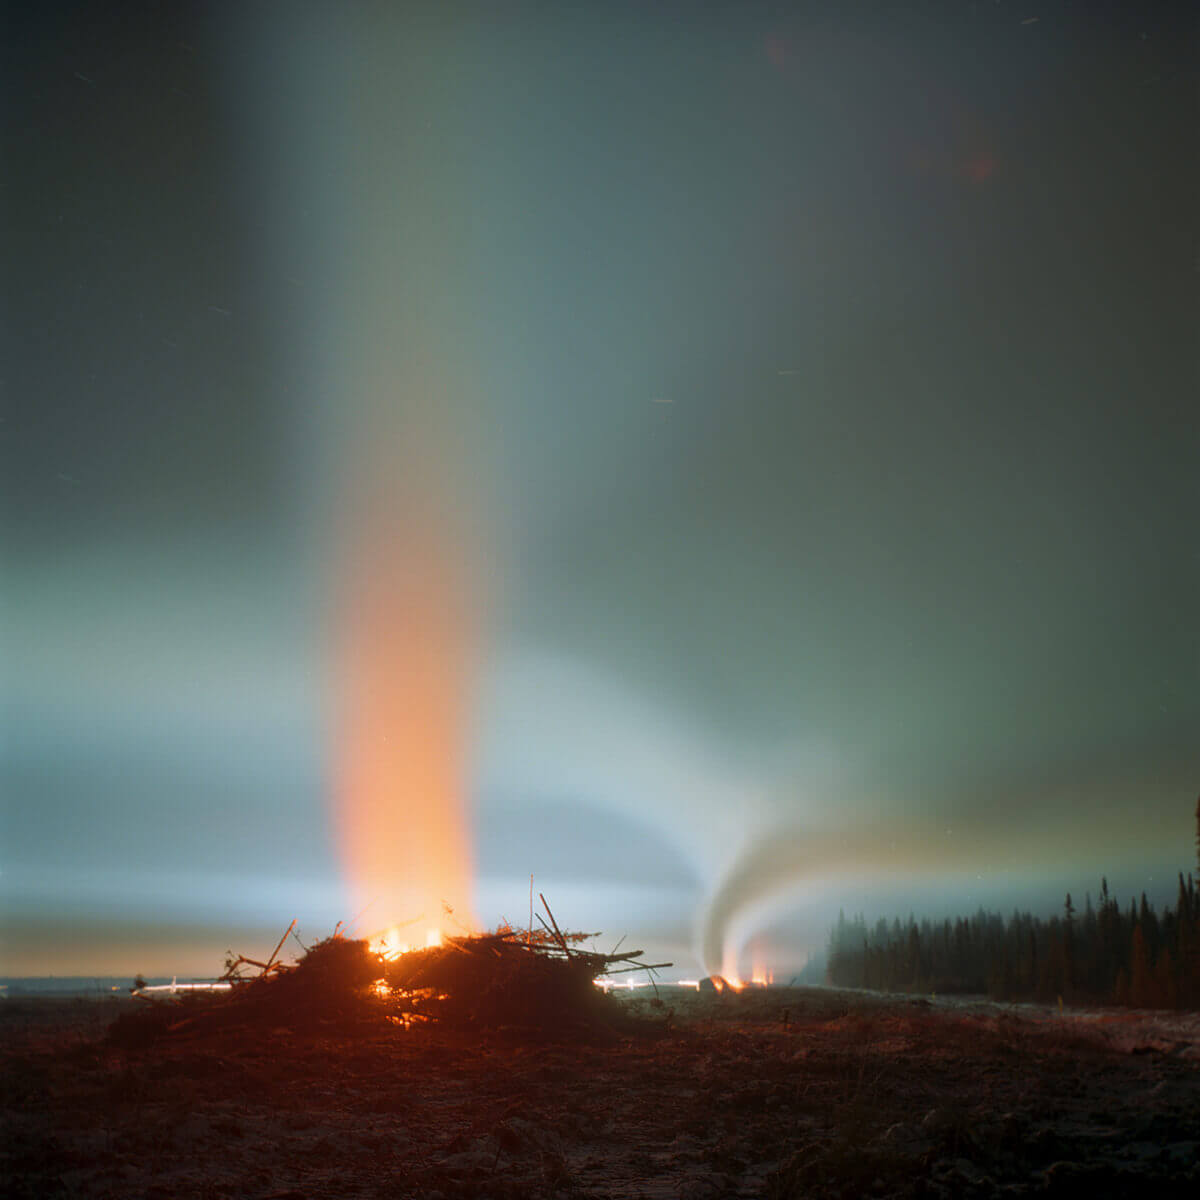 A long exposure photo of a bonfire.